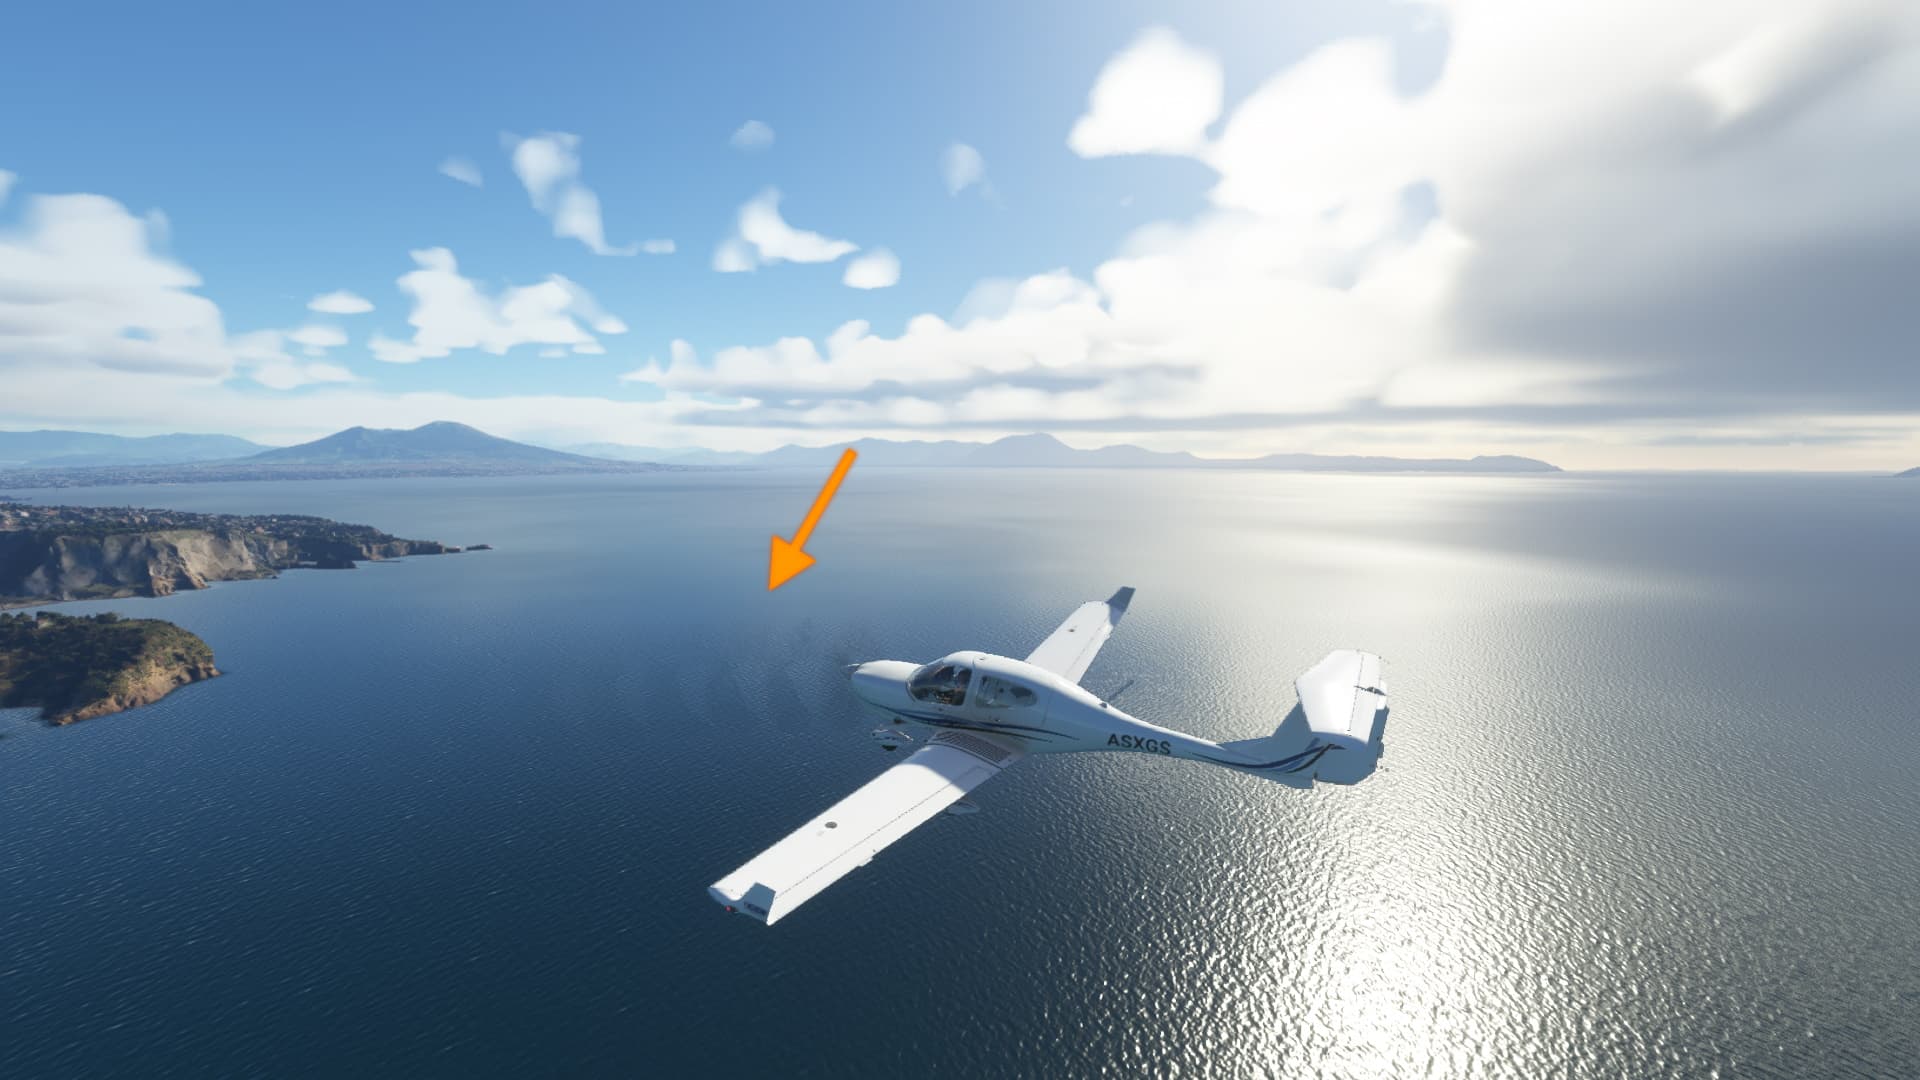 Microsoft Flight Simulator's installation process is the worst